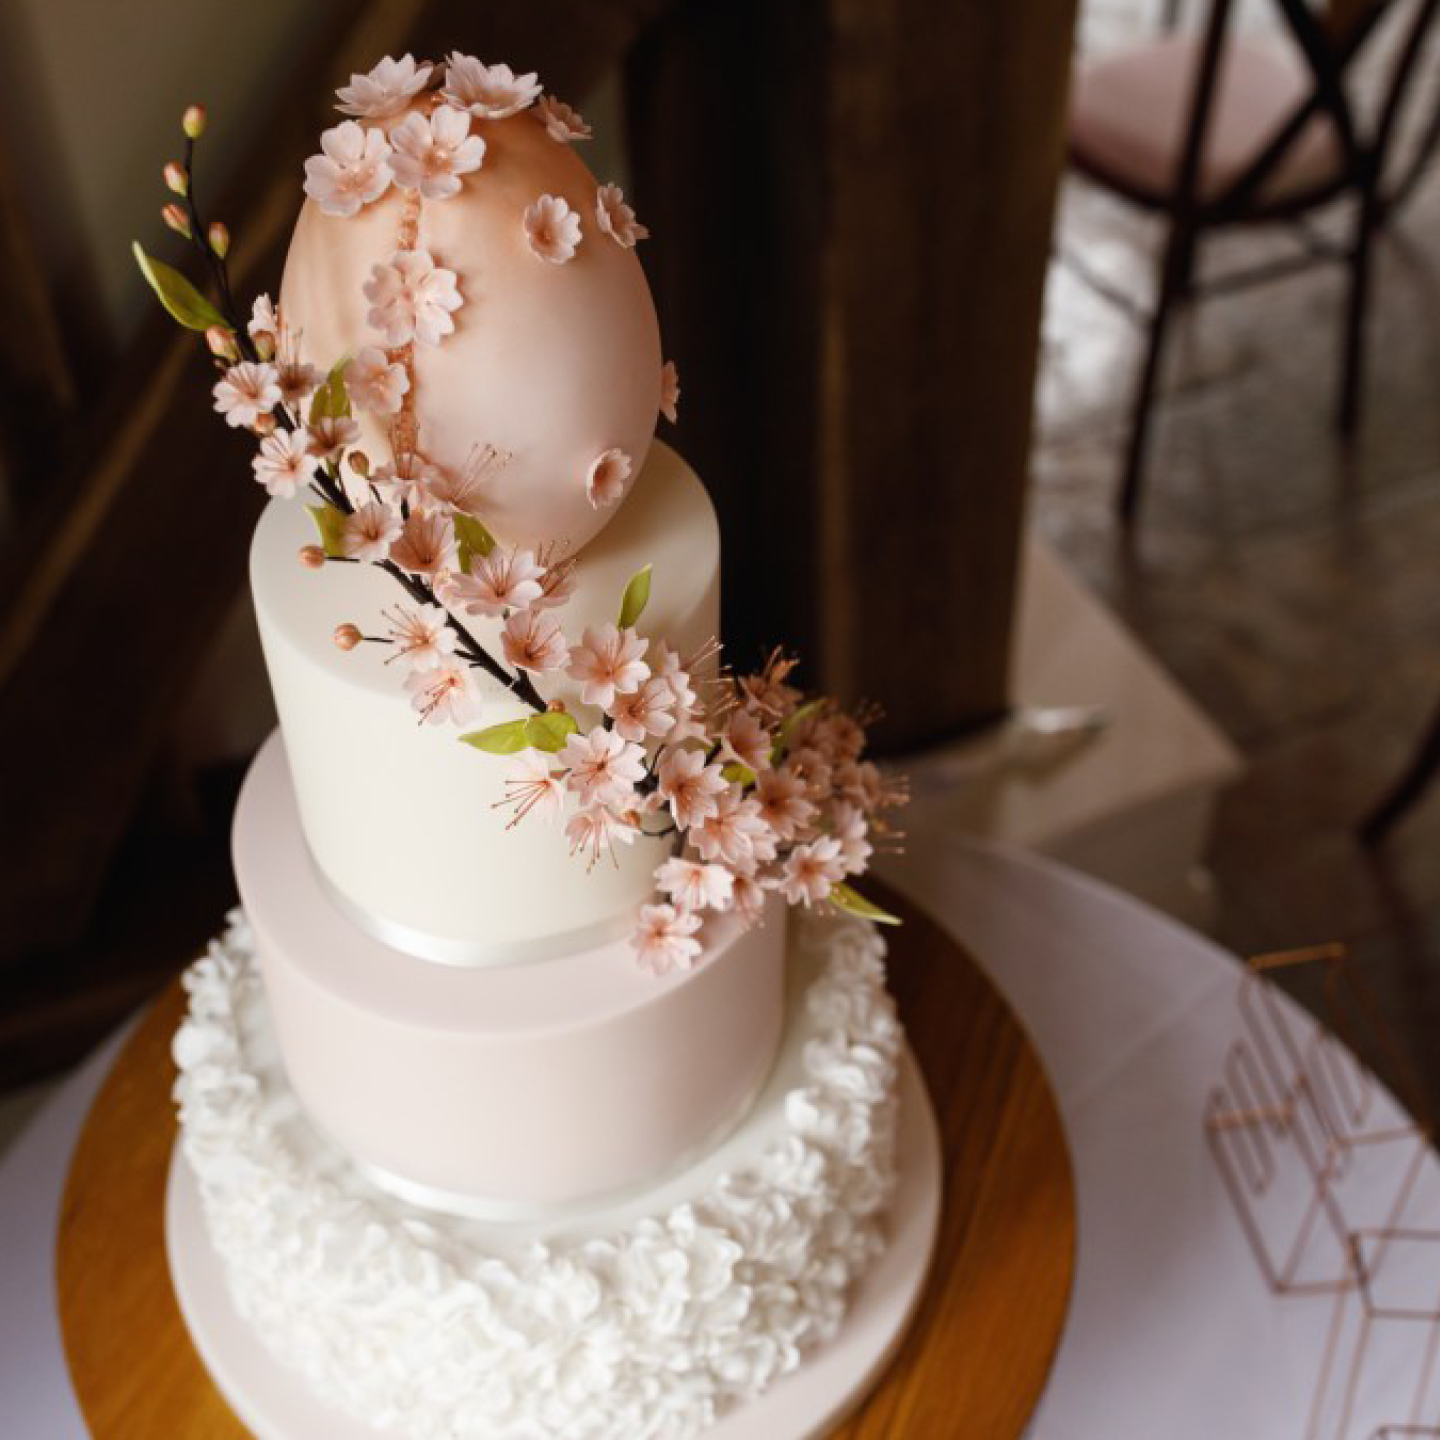 Wedition - Your wedding cake